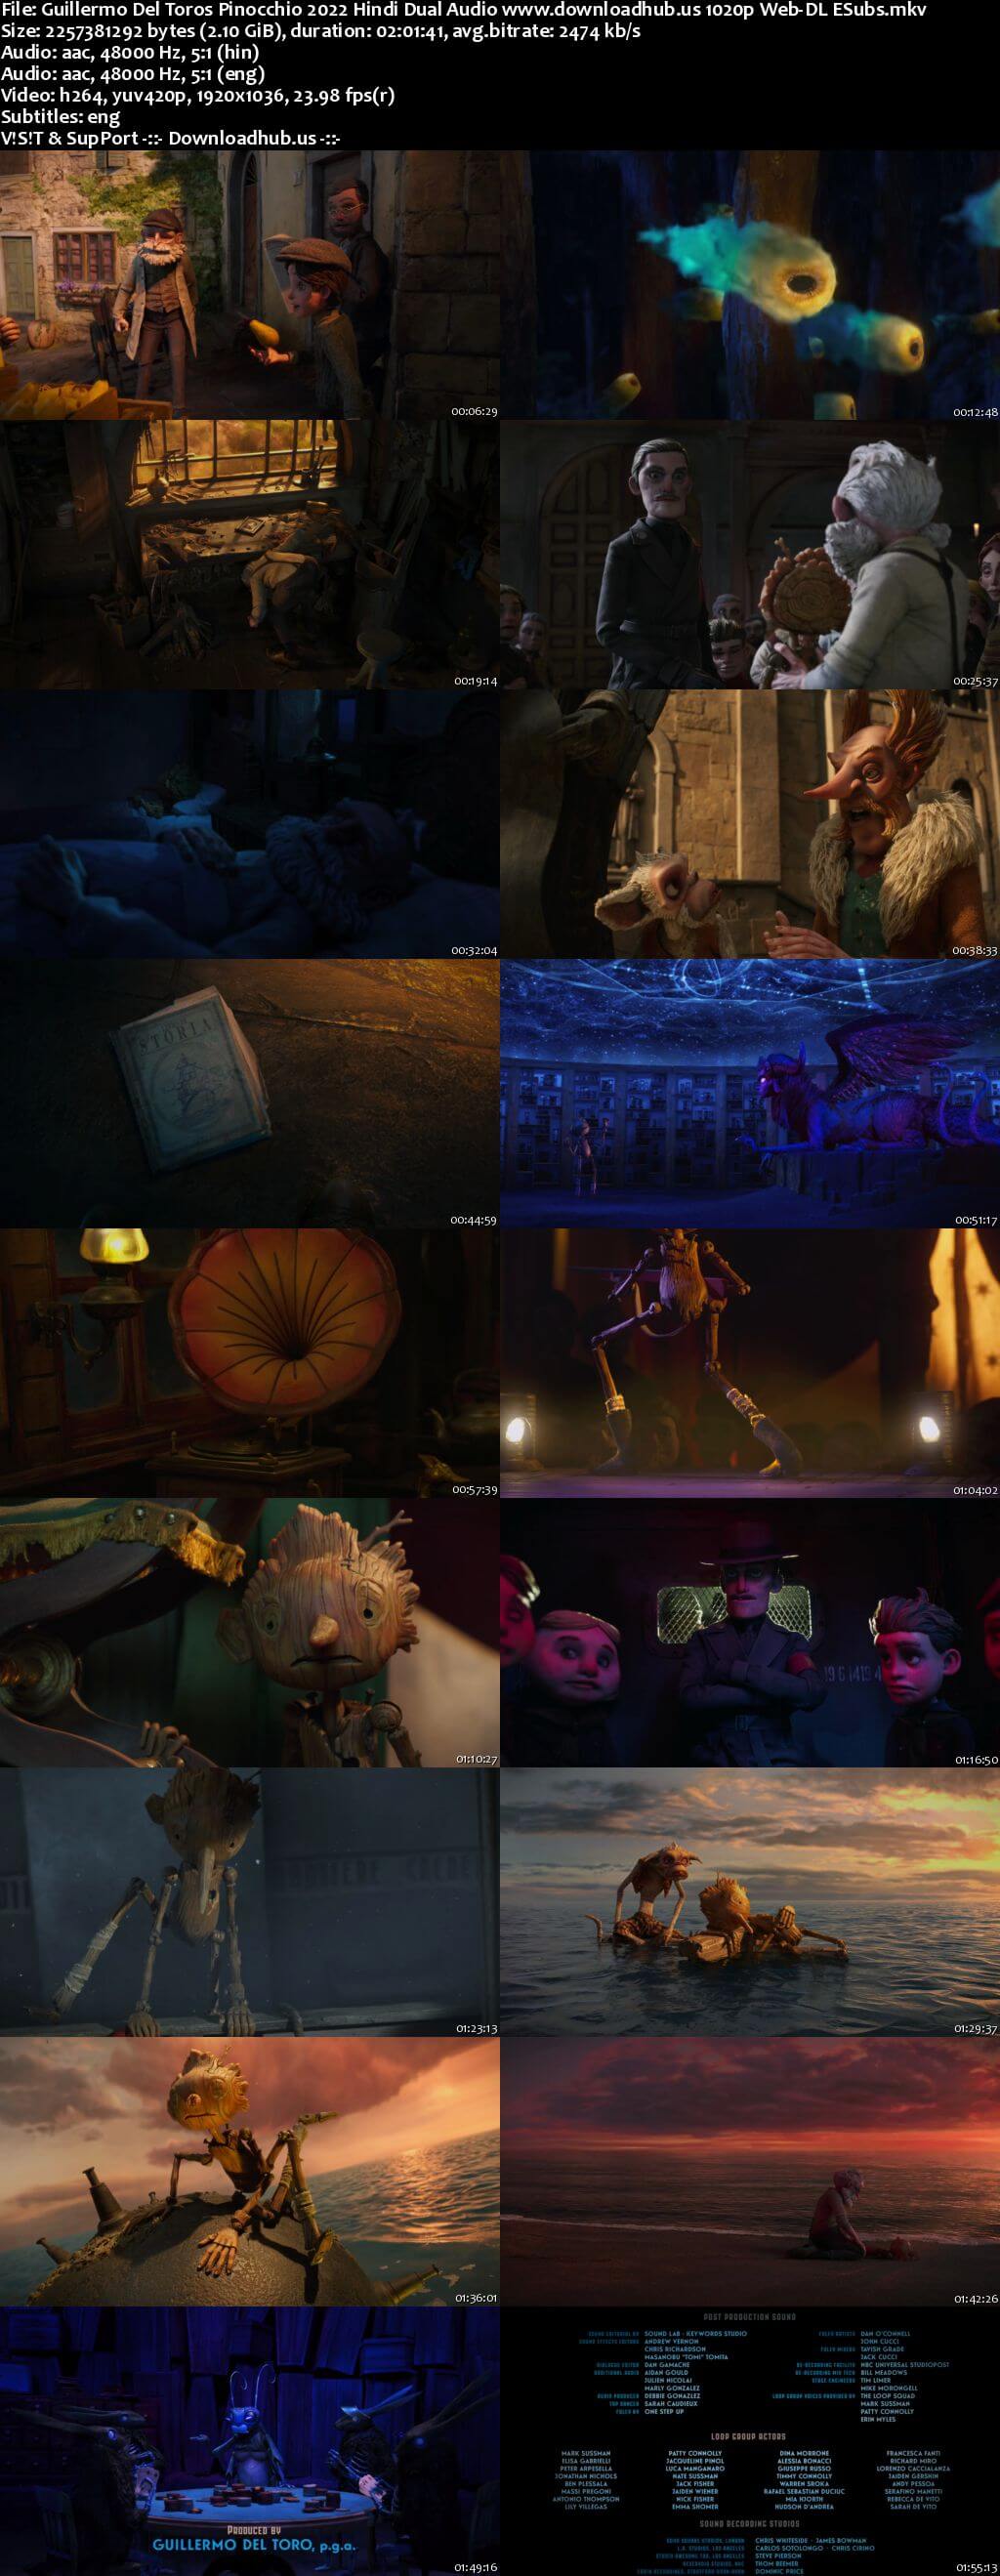 Guillermo Del Toros Pinocchio 2022 Hindi Dual Audio 1080p 720p 480p Web-DL ESubs HEVC